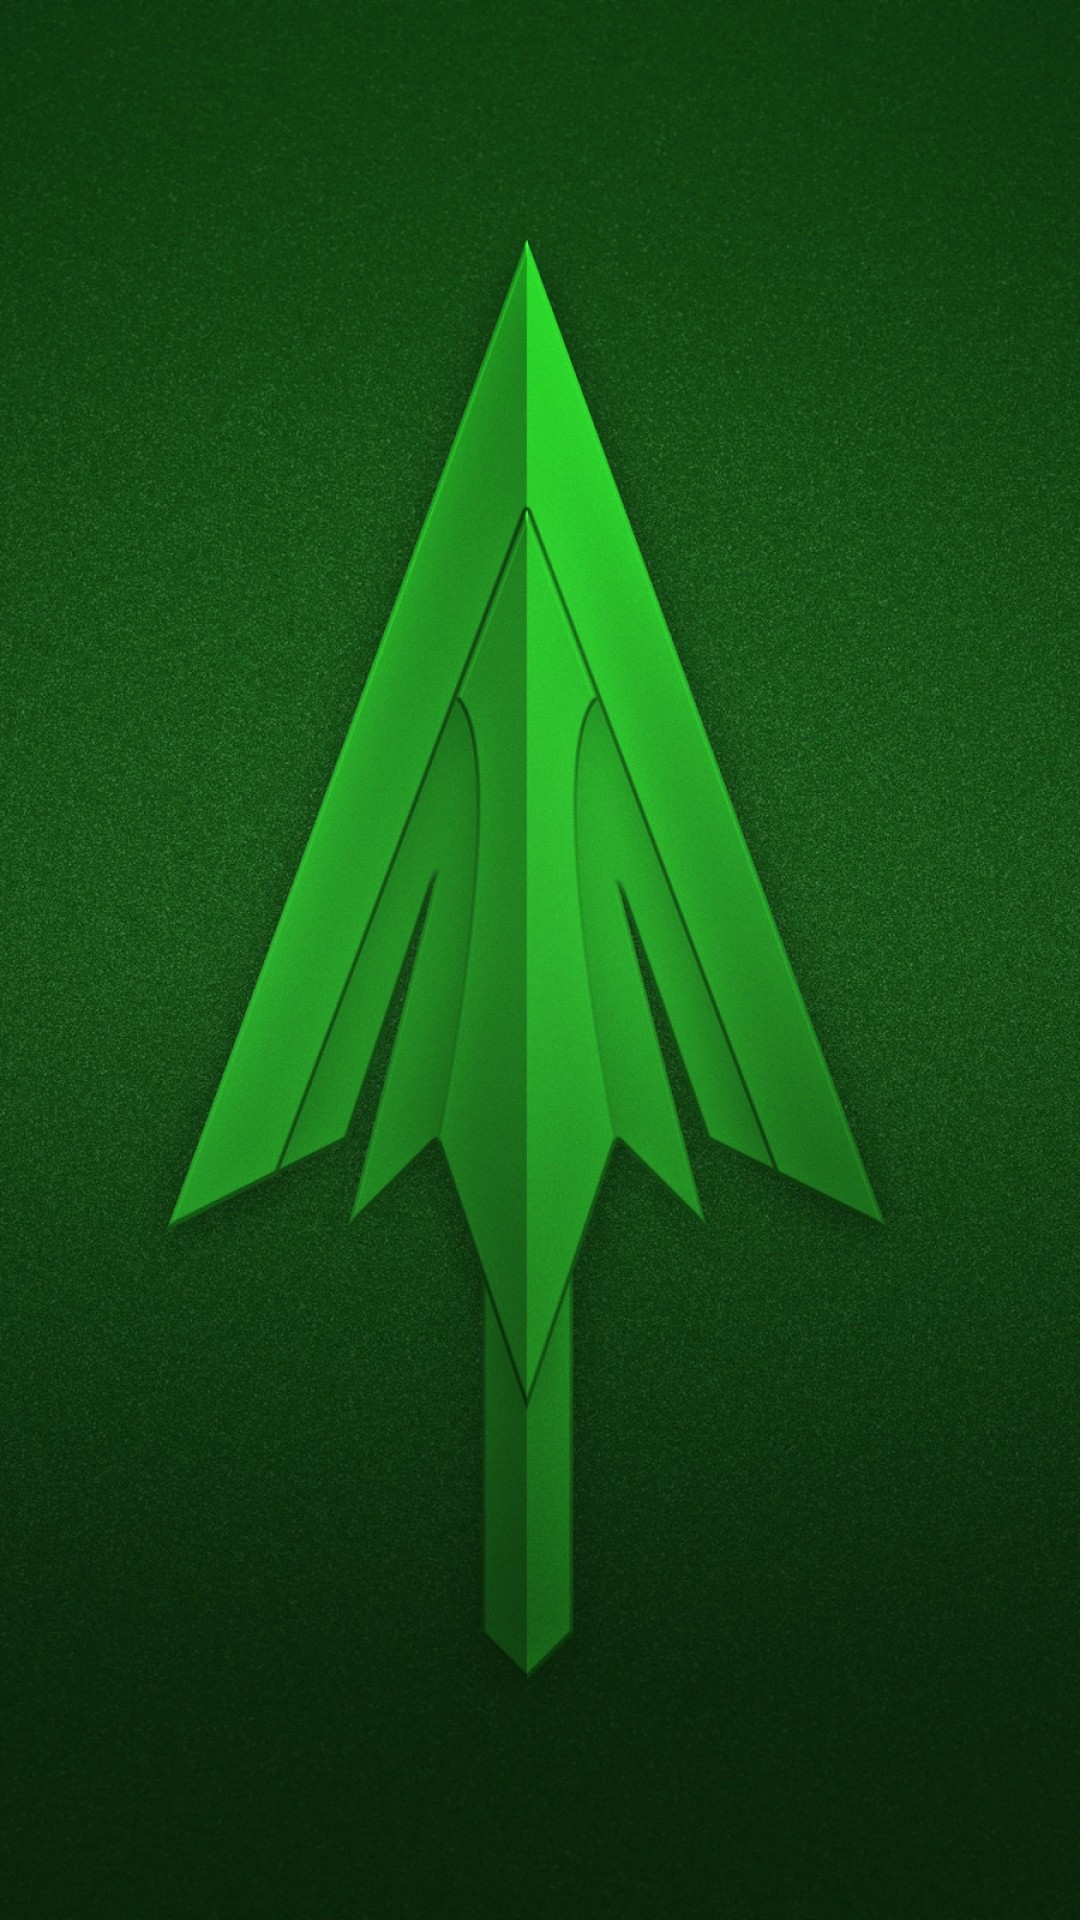 Green Arrow iPhone 7 wallpaper